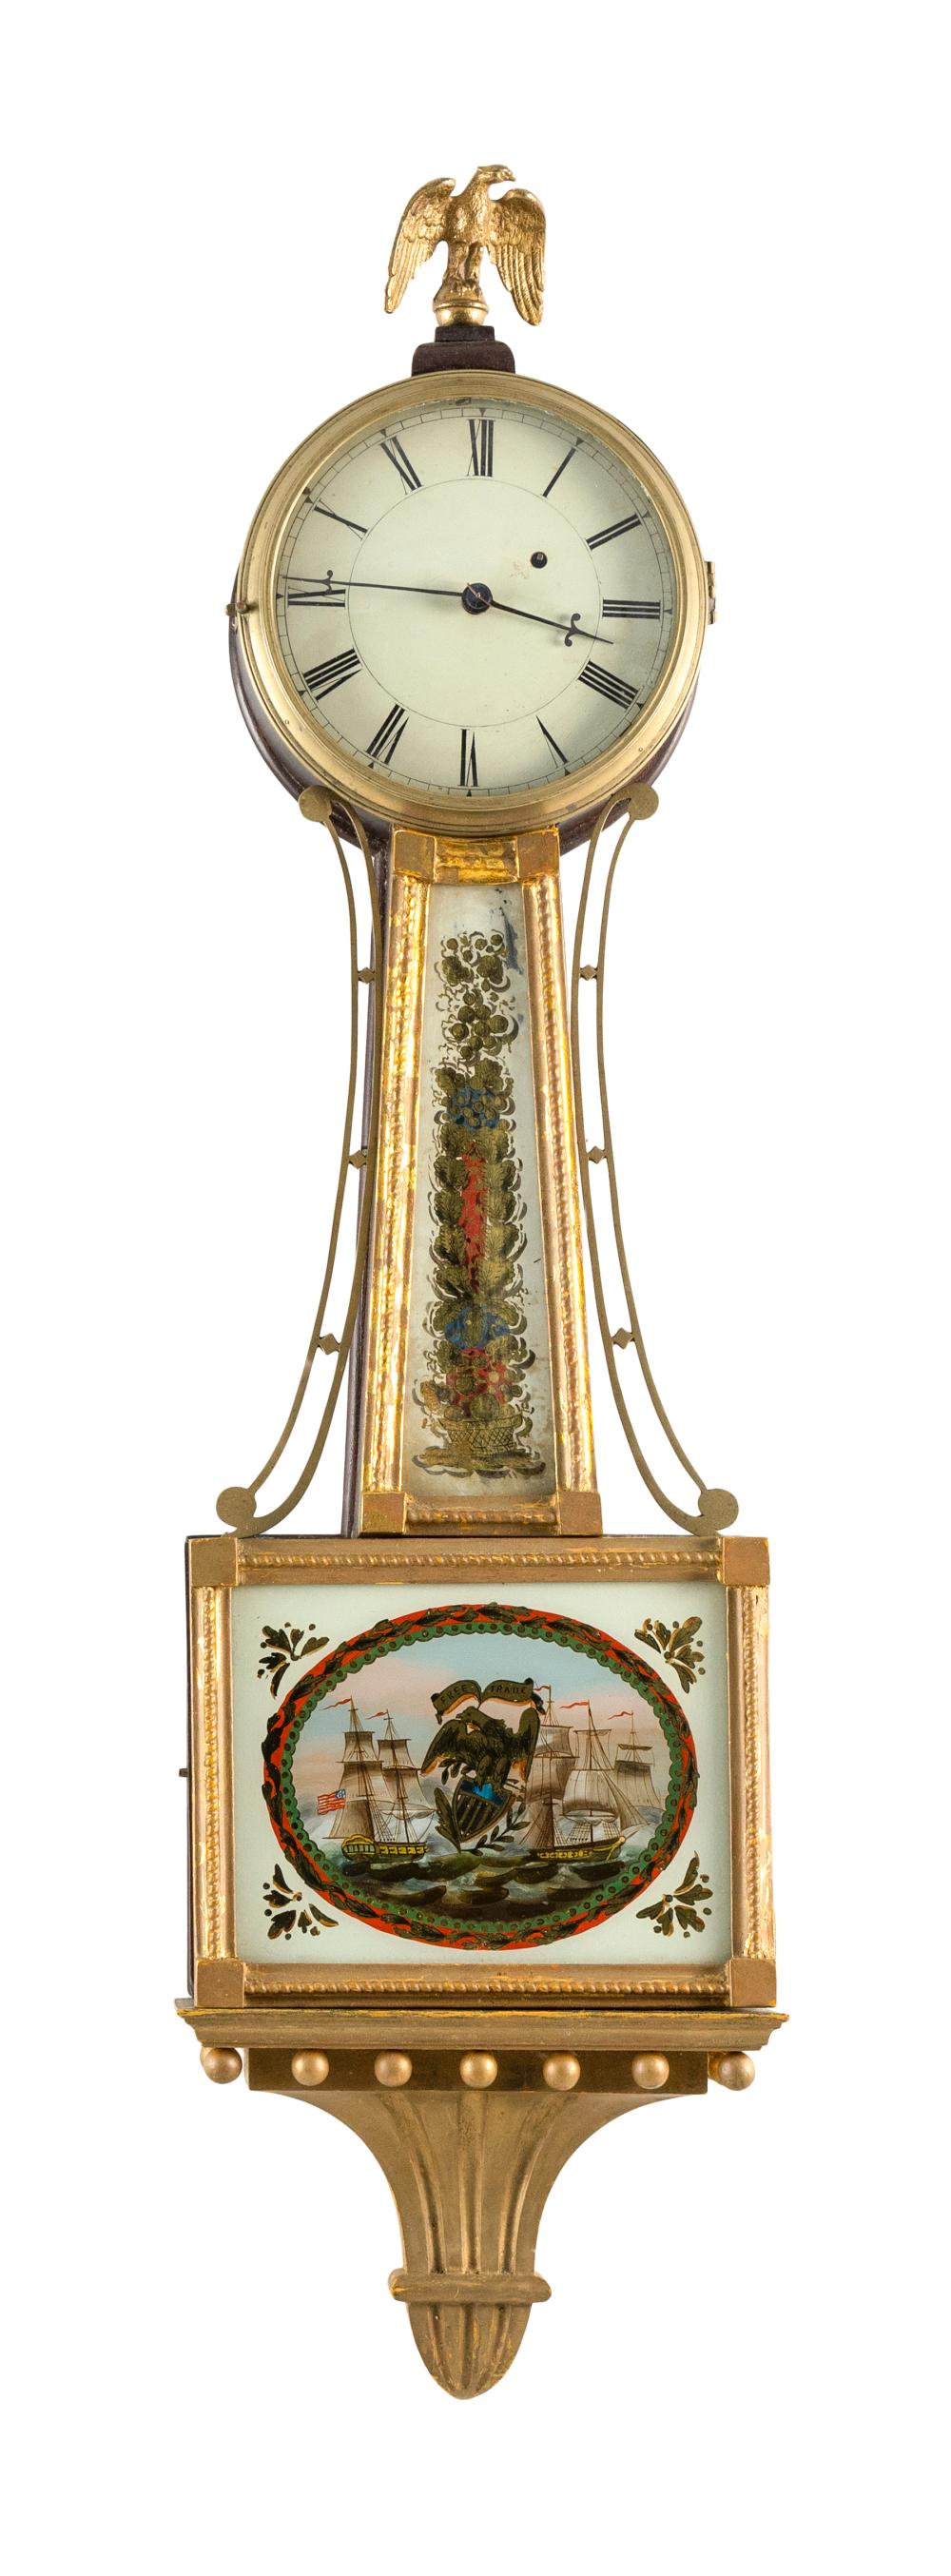 EARLY AMERICAN BANJO CLOCK CIRCA 1820